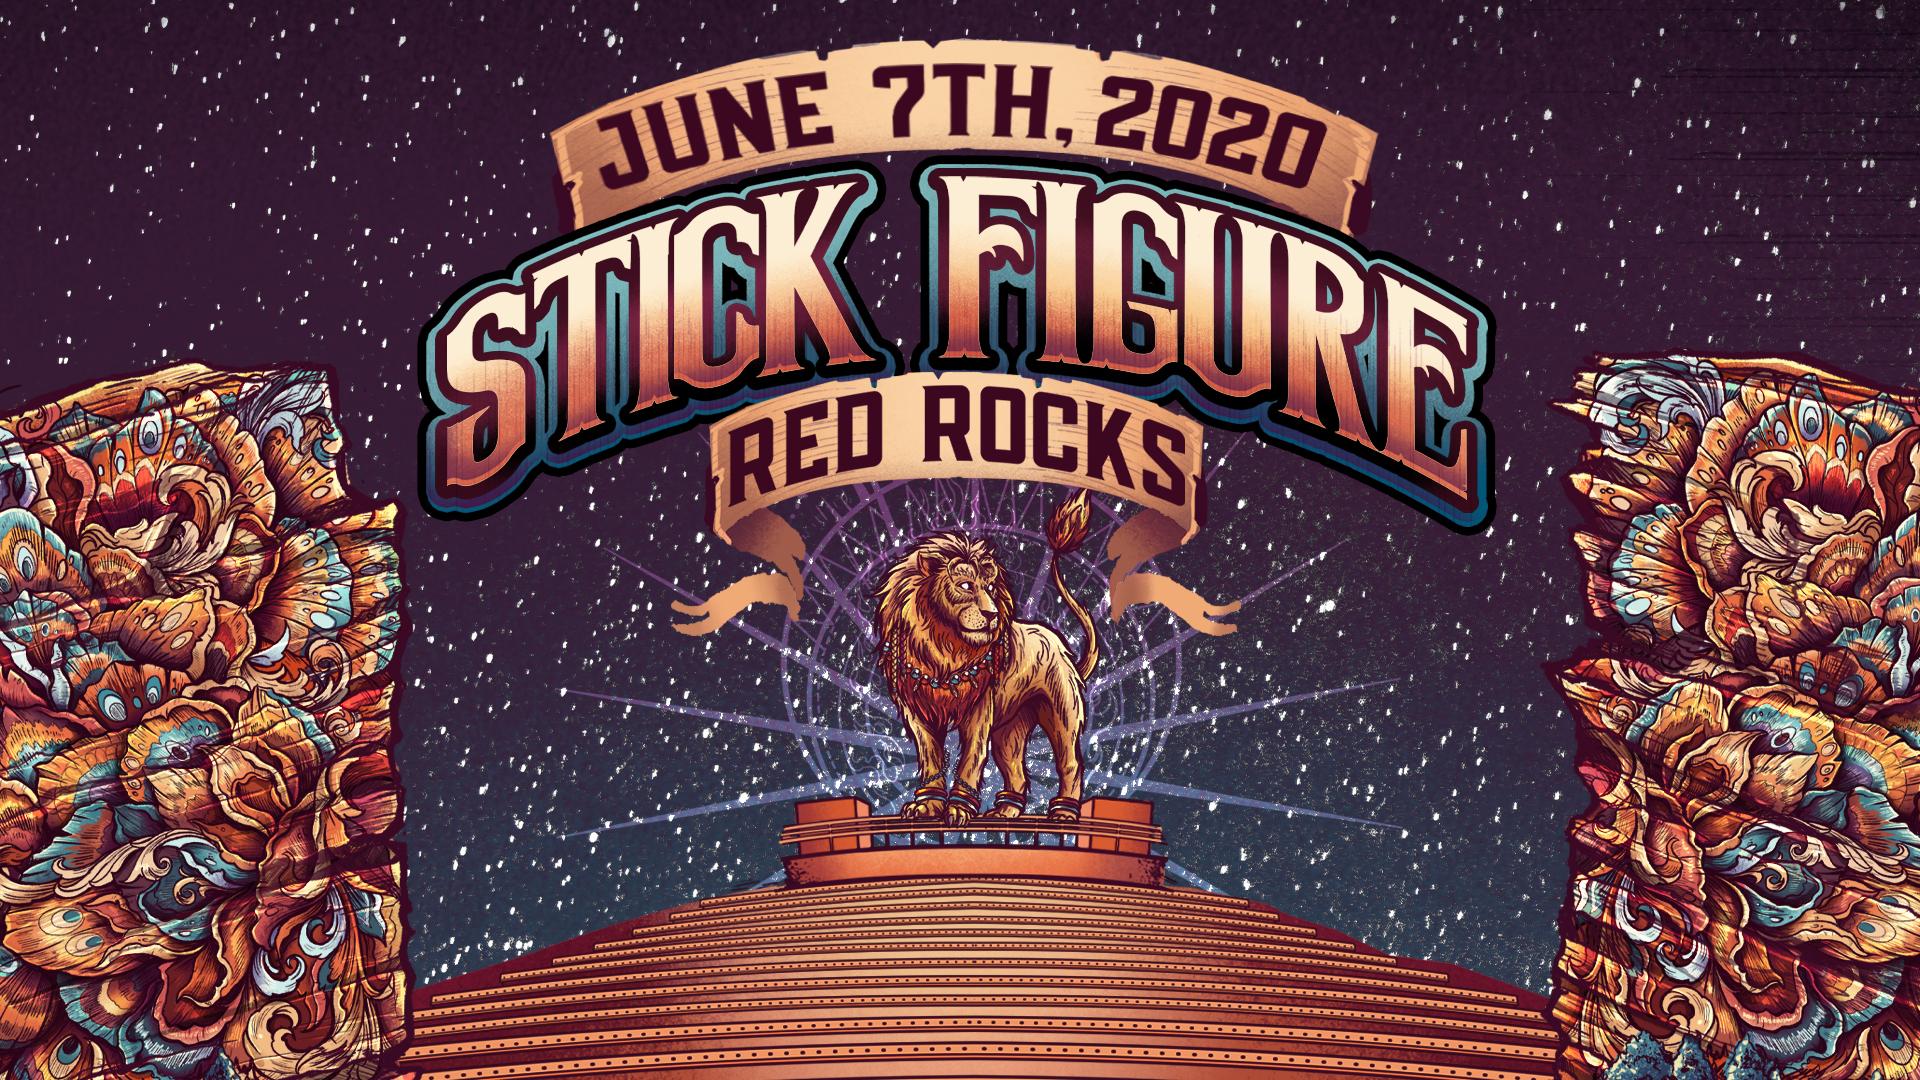 Stick Figure at Red Rocks Amphitheatre 6 JUN 2021